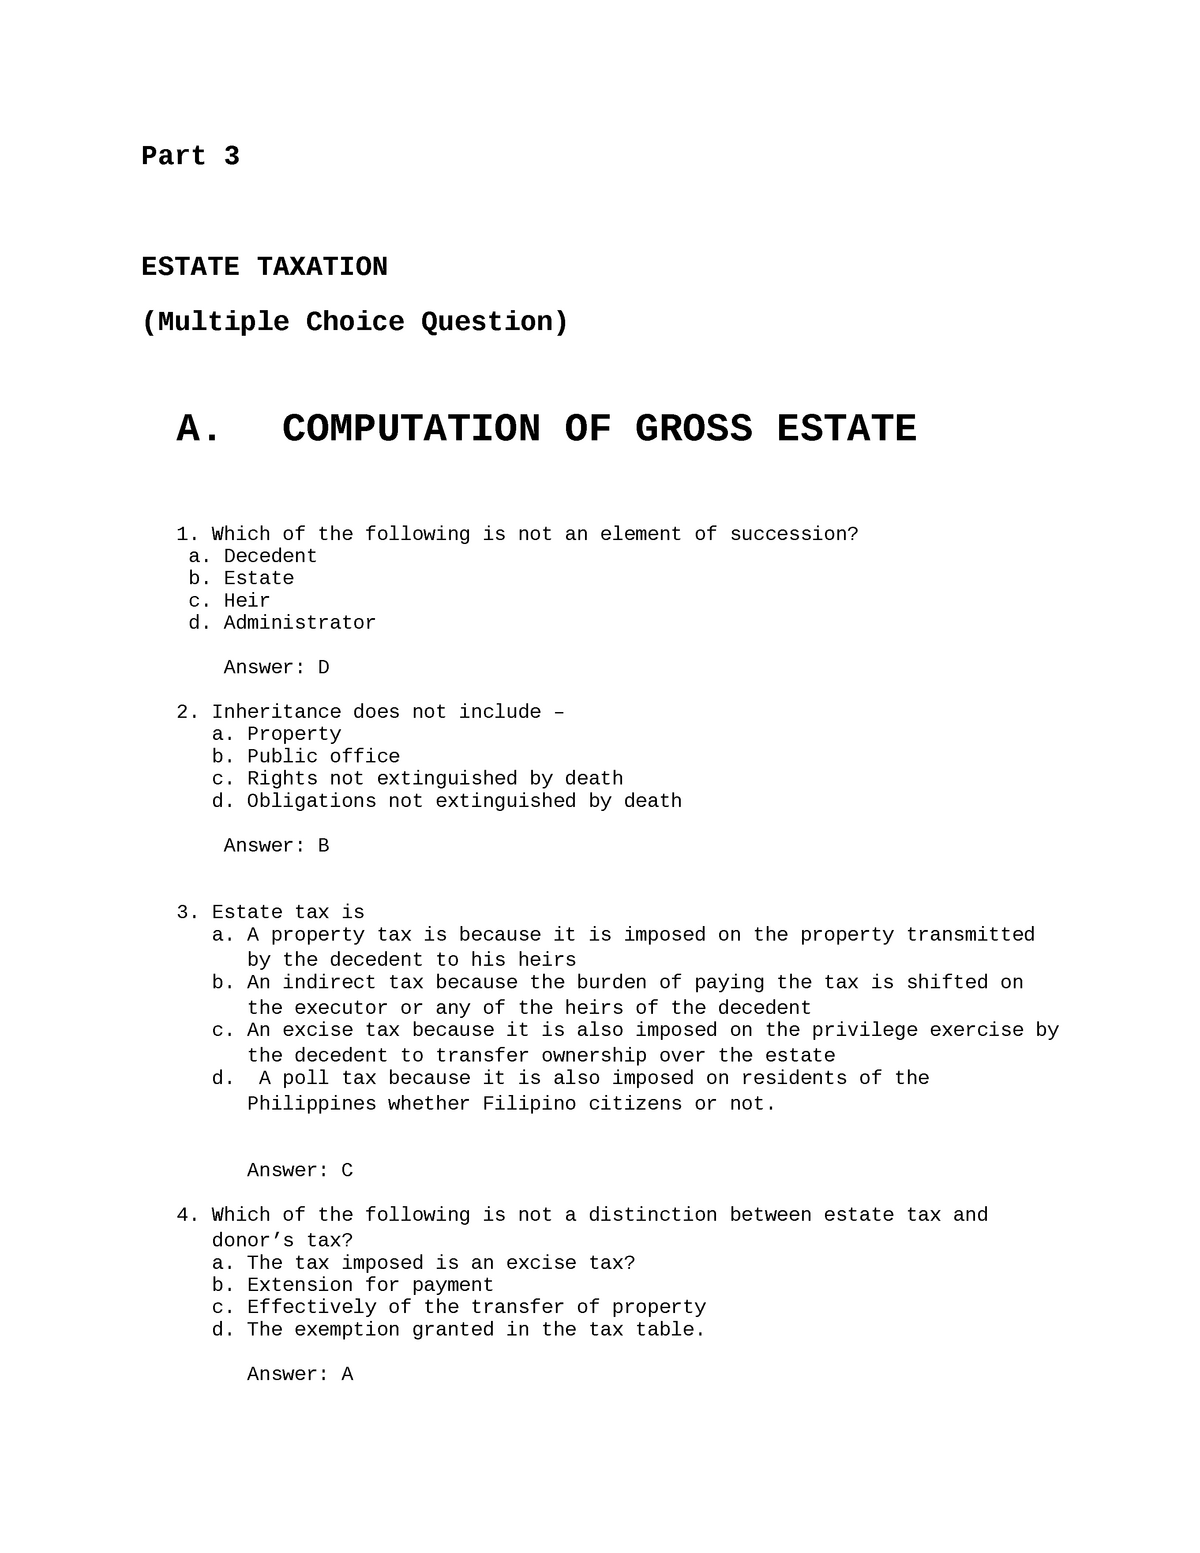 tax-2-part-3-estate-tax-1-and-gross-tax-estate-part-3-estate-taxation